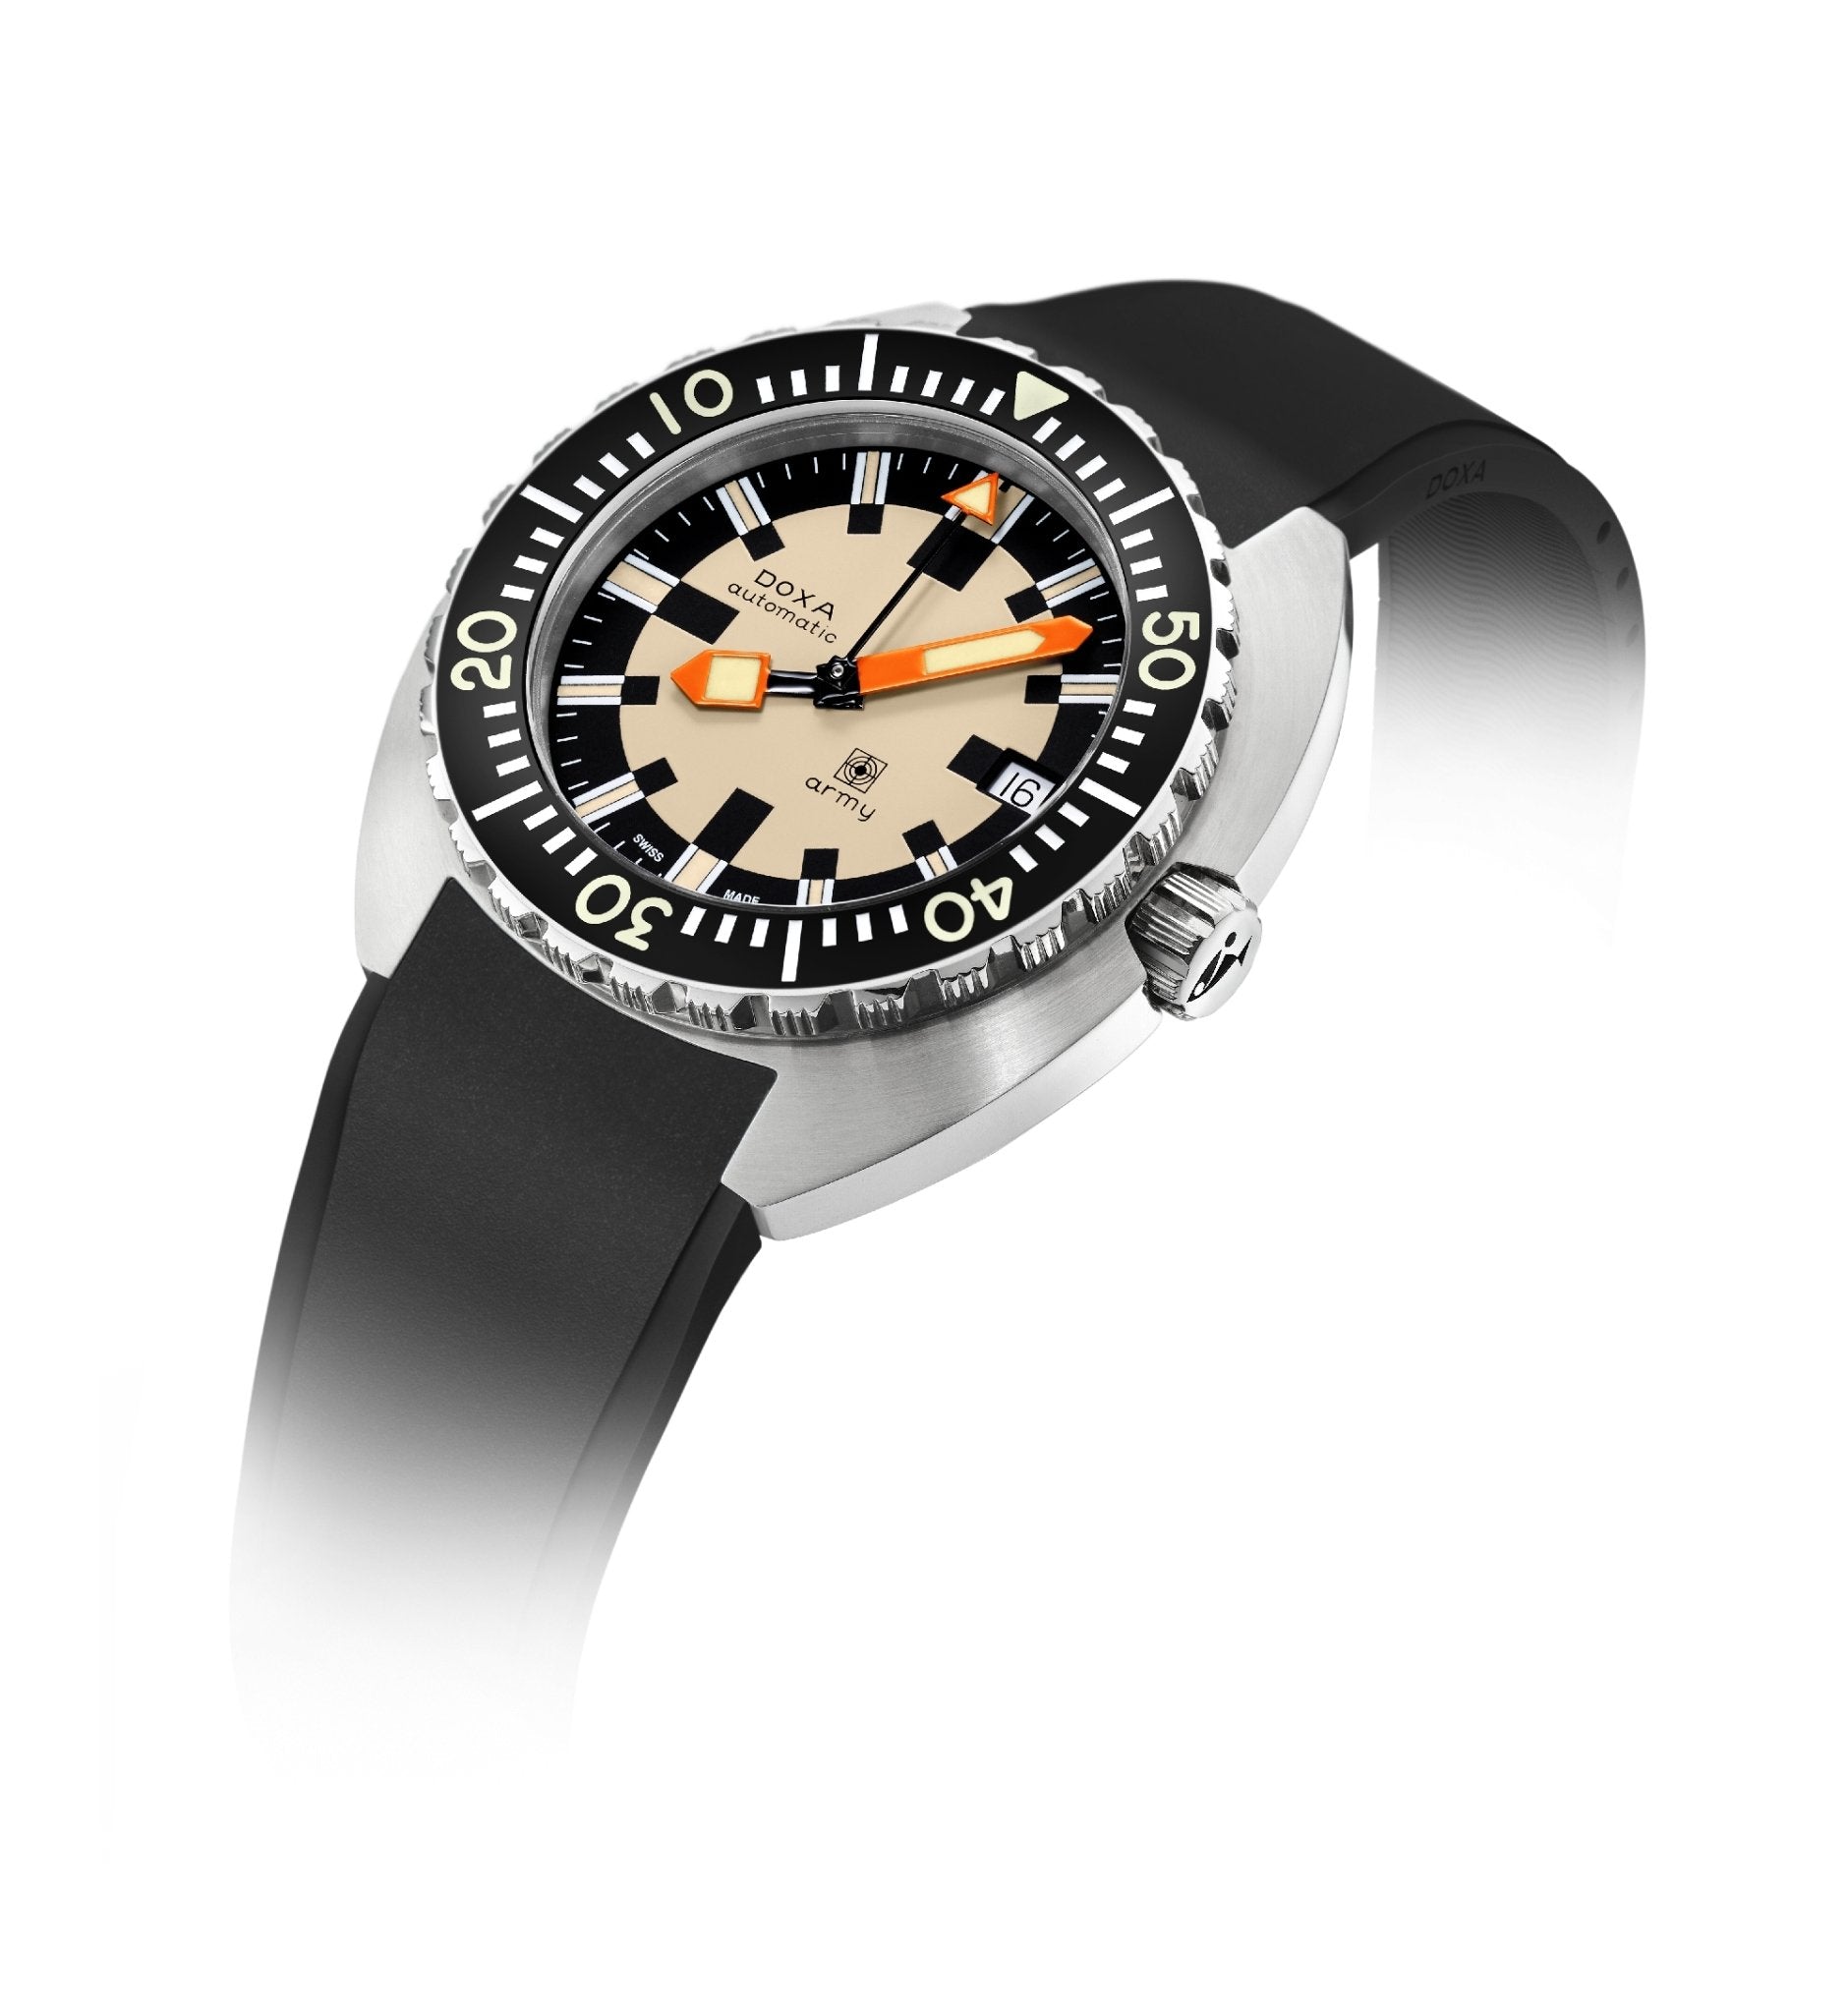 DOXA Army, stainless steel bezel - DOXA Watches US